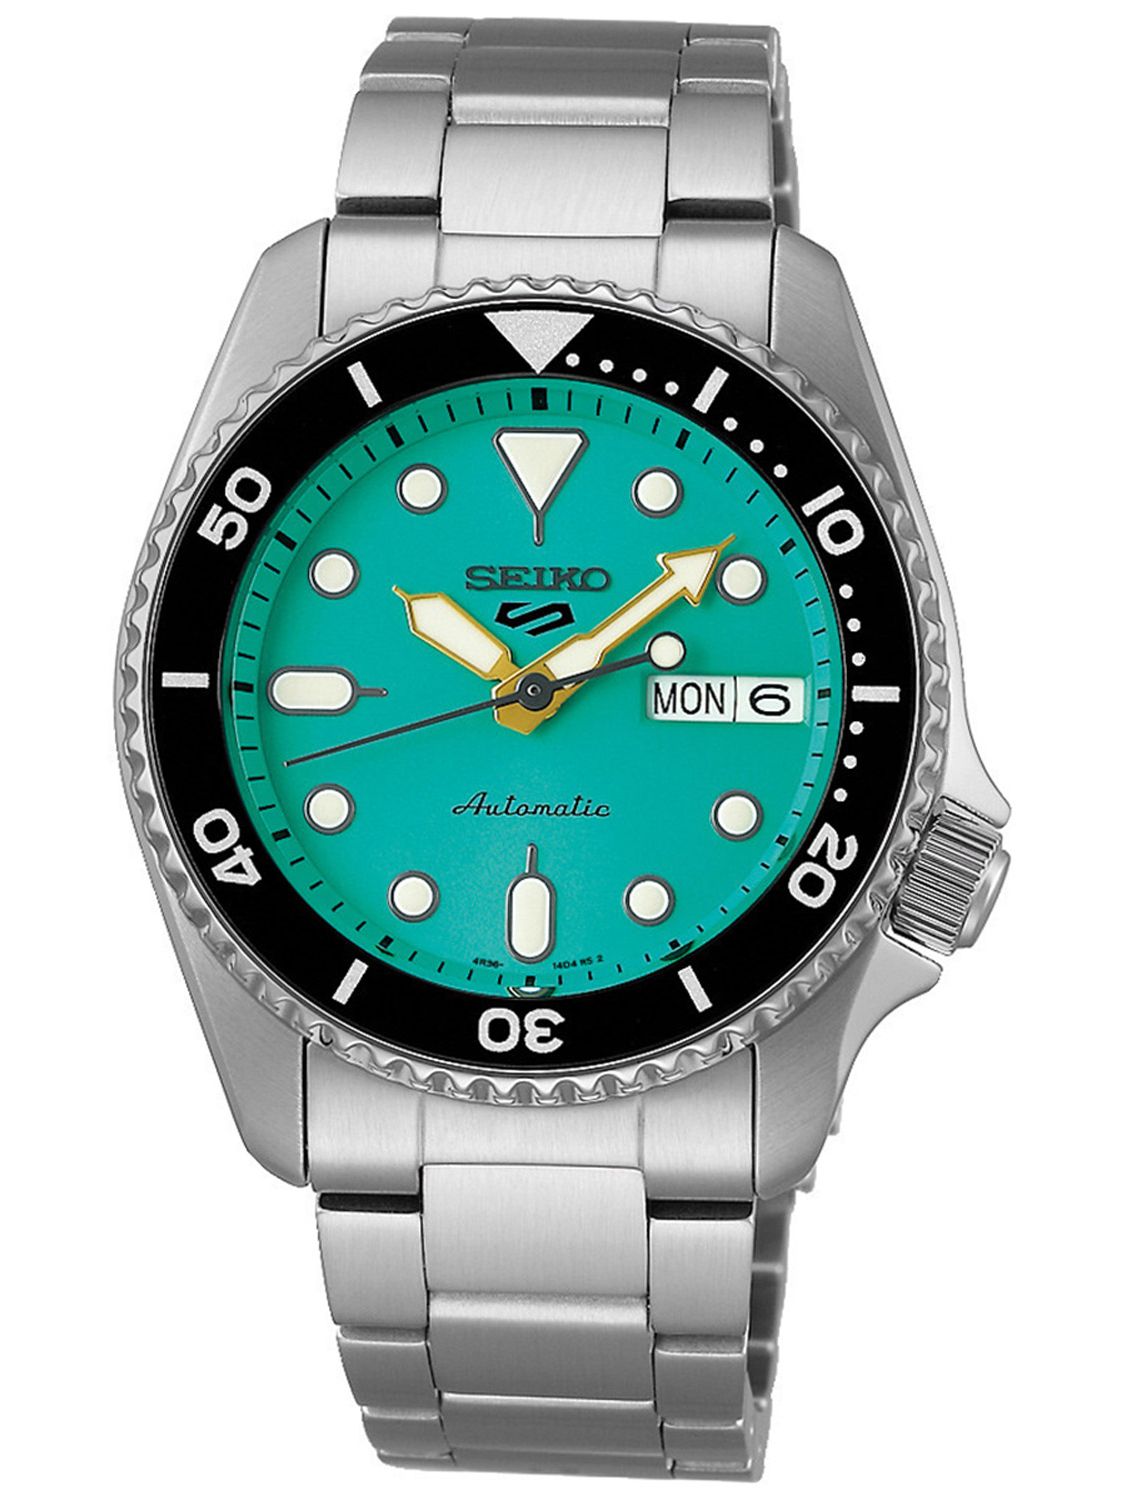 Seiko 5 Sports Unisex Steel/Turquoise Watch uhrcenter SRPK33K1 Automatic •